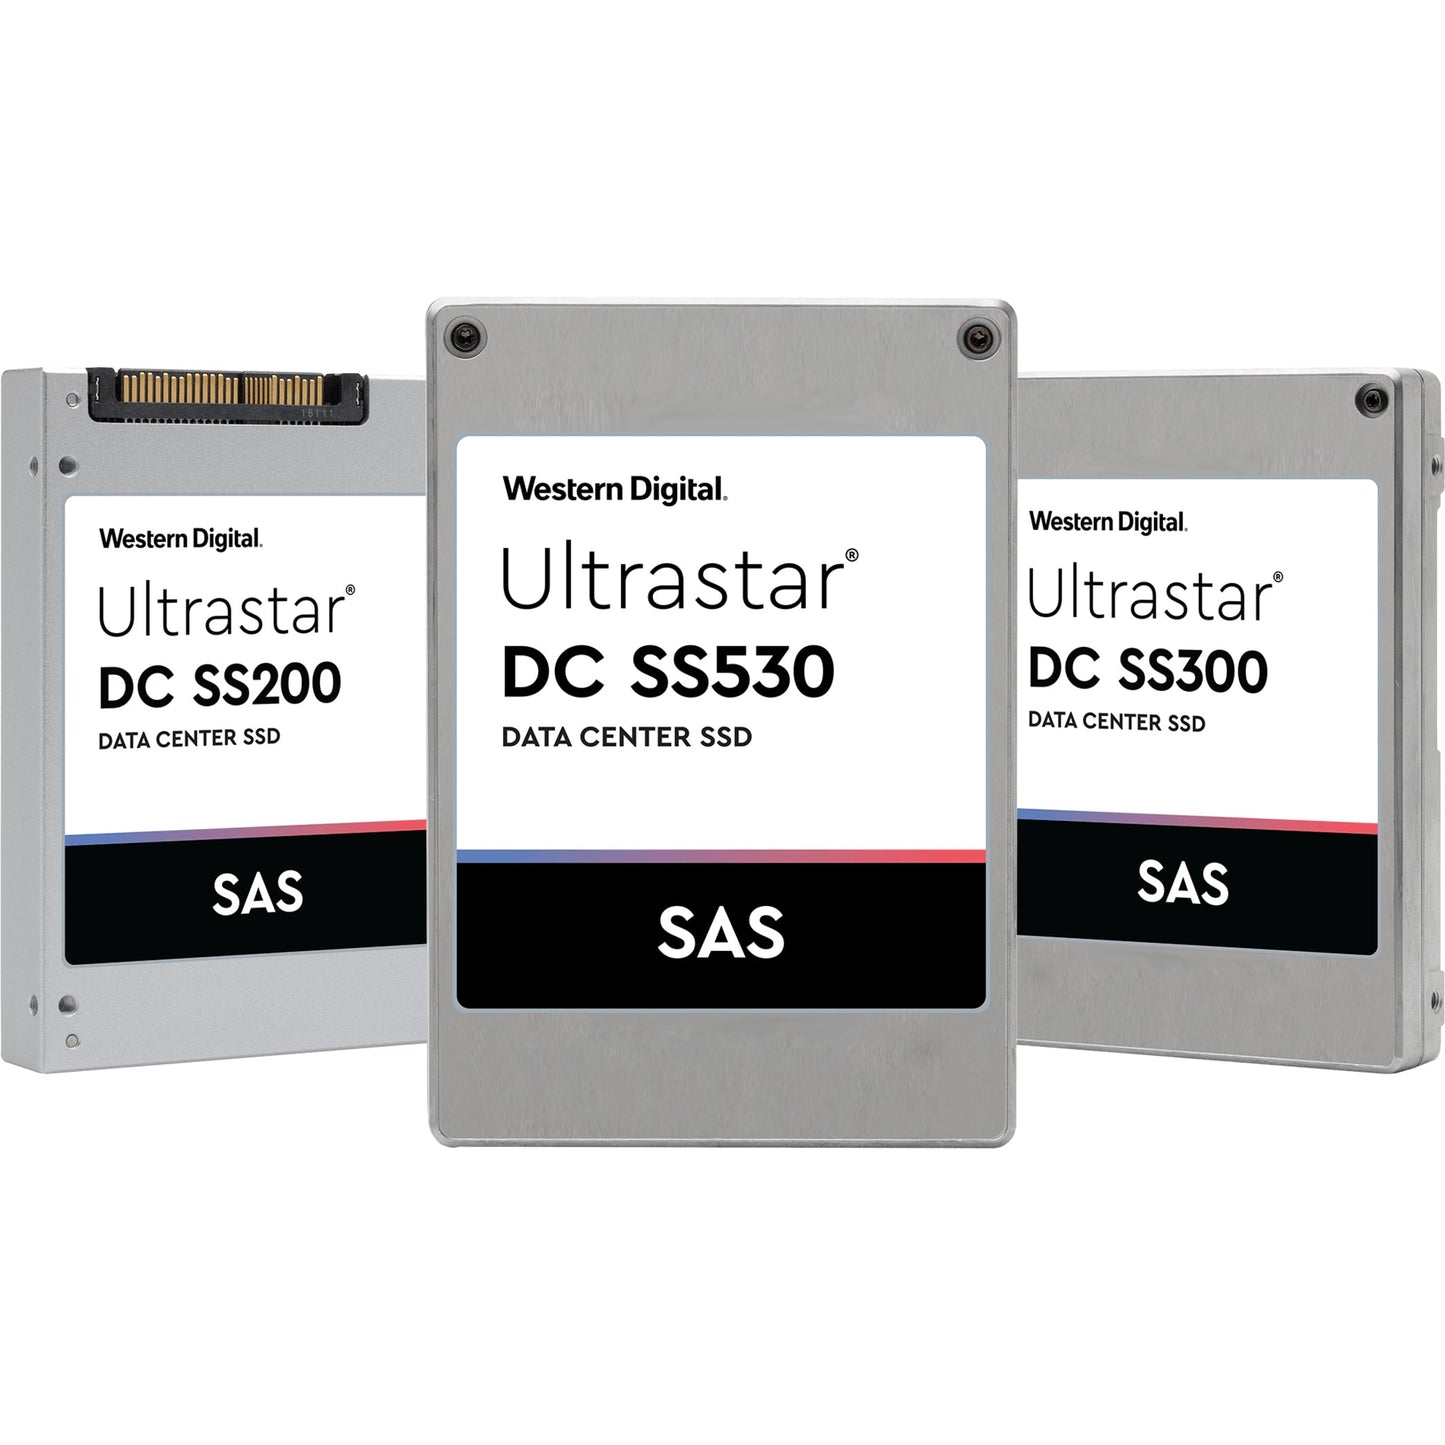 Western Digital Ultrastar DC SS530 WUSTM3216ASS201 1.60 TB Solid State Drive - 2.5" Internal - SAS (12Gb/s SAS)